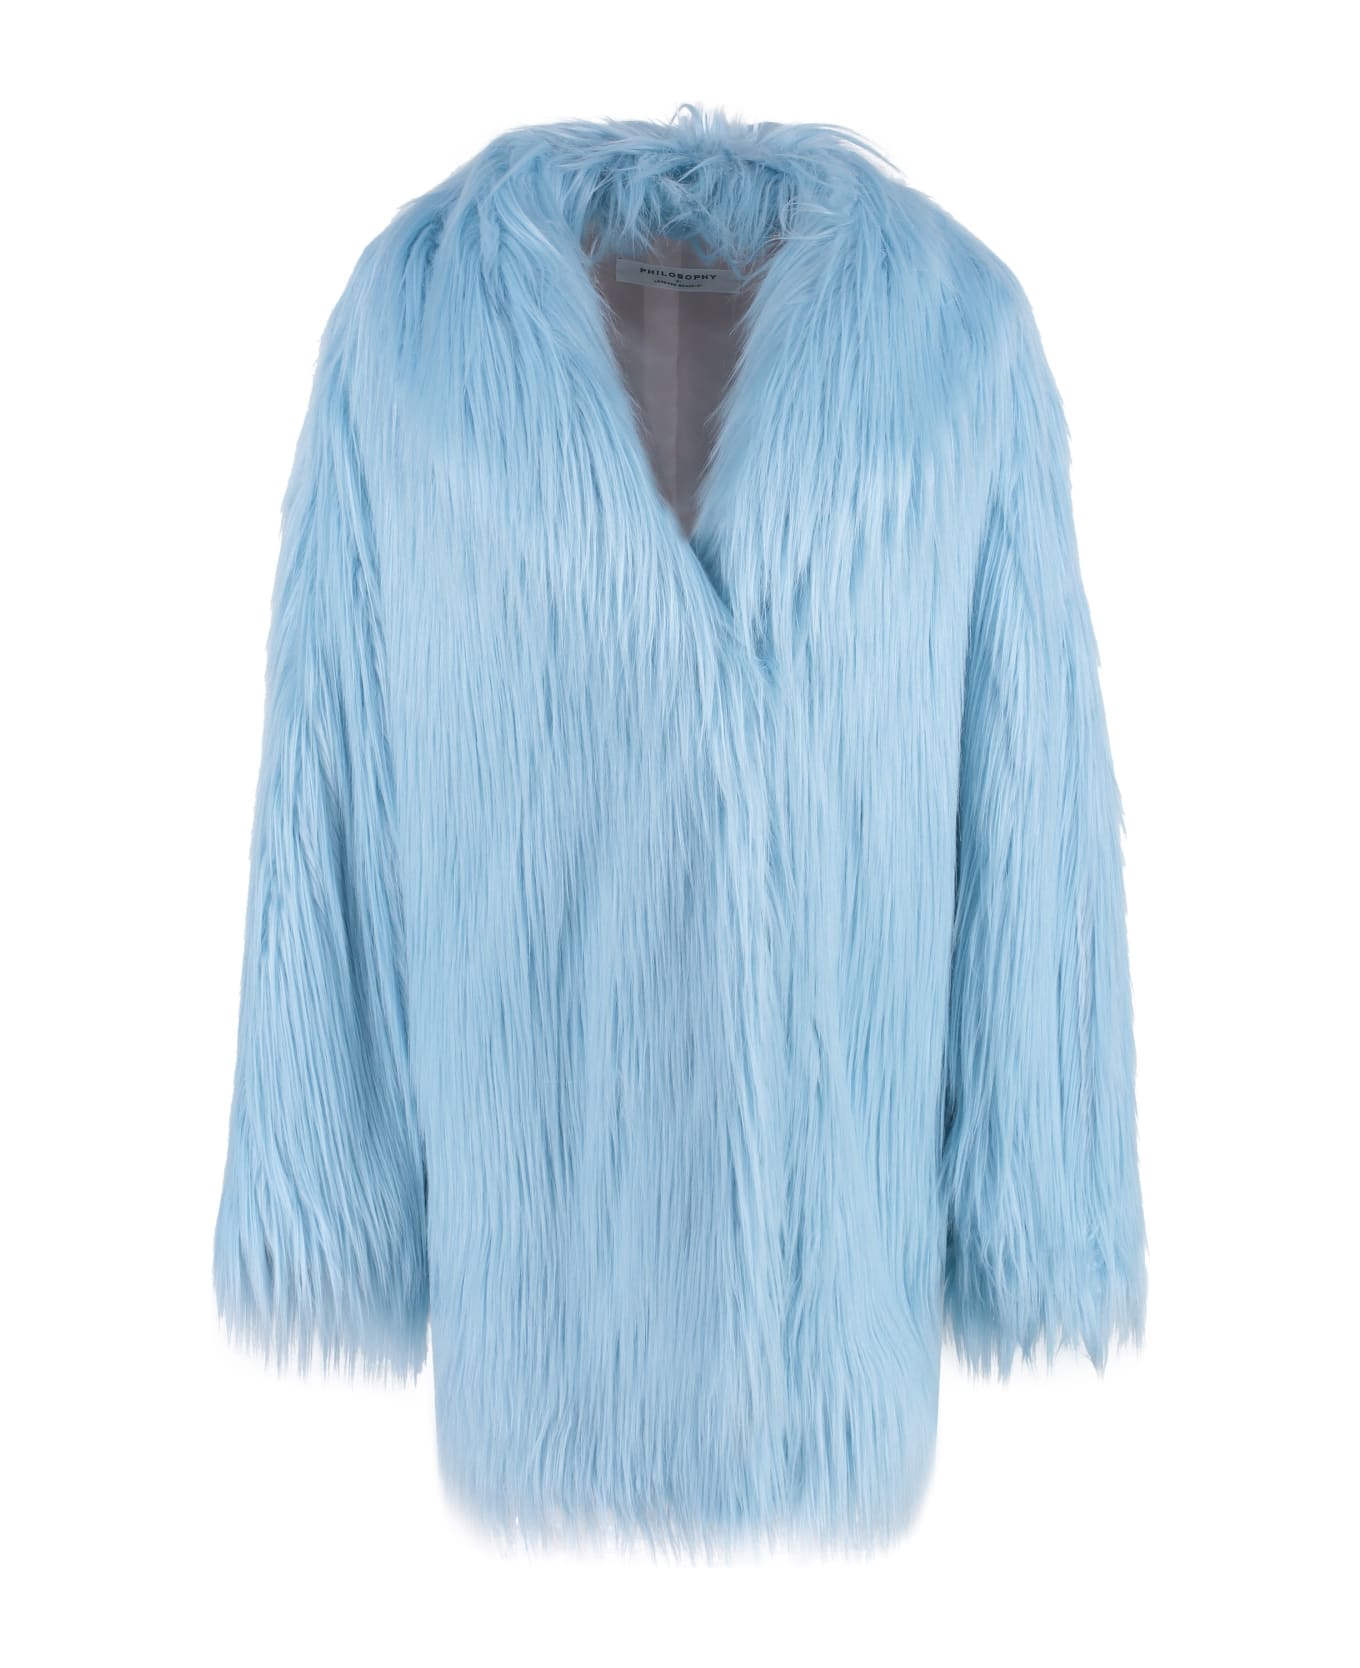 Philosophy di Lorenzo Serafini Faux Fur Coat - Light Blue